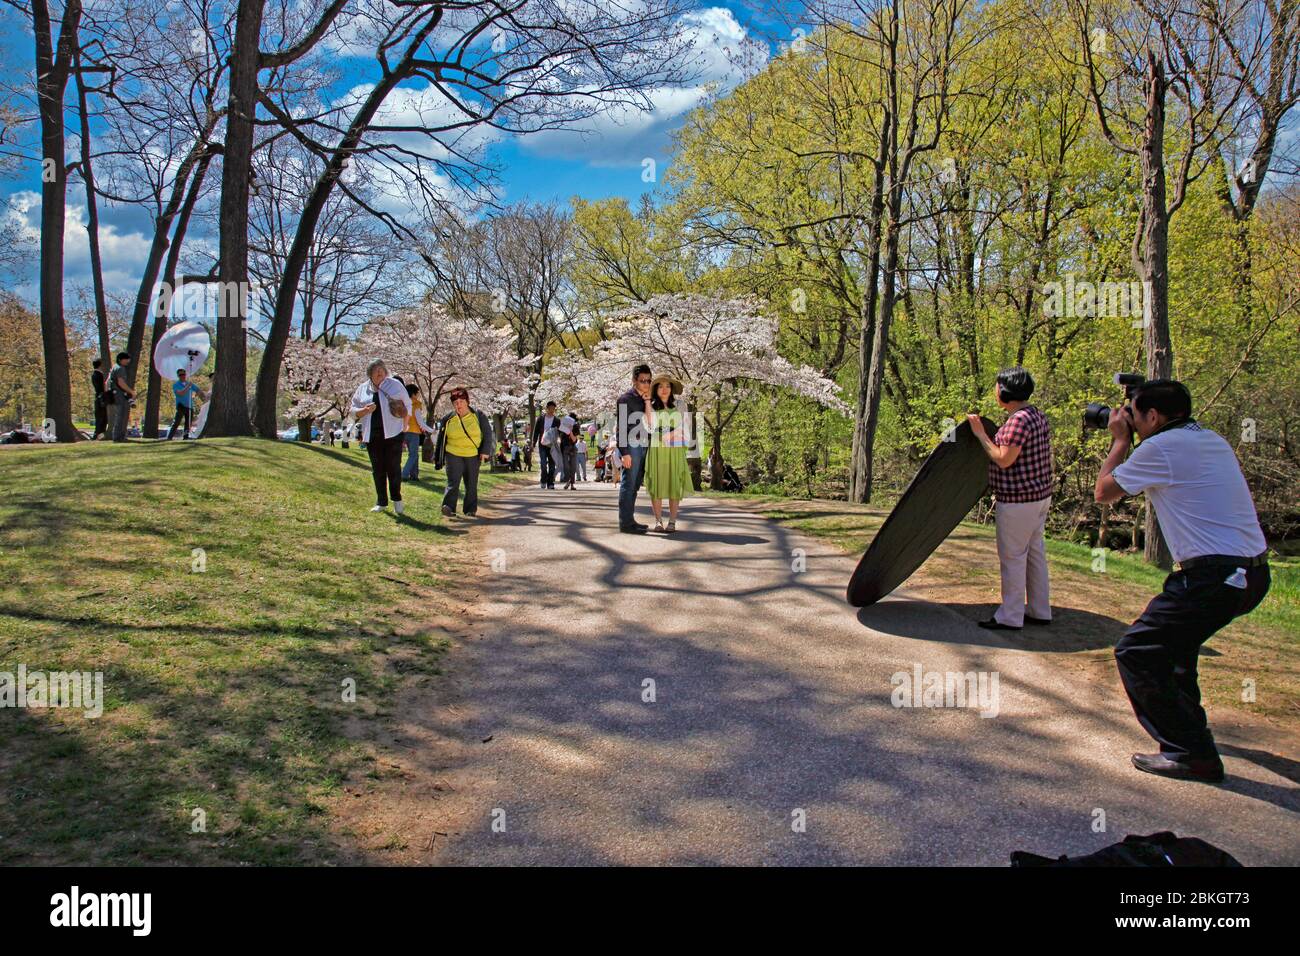 Canada, Ontario, Toronto, High Park, Cherry Blossom trees in full bloom with people enjoying the park, Japanese Sakura Cherry Blossoms, Stock Photo